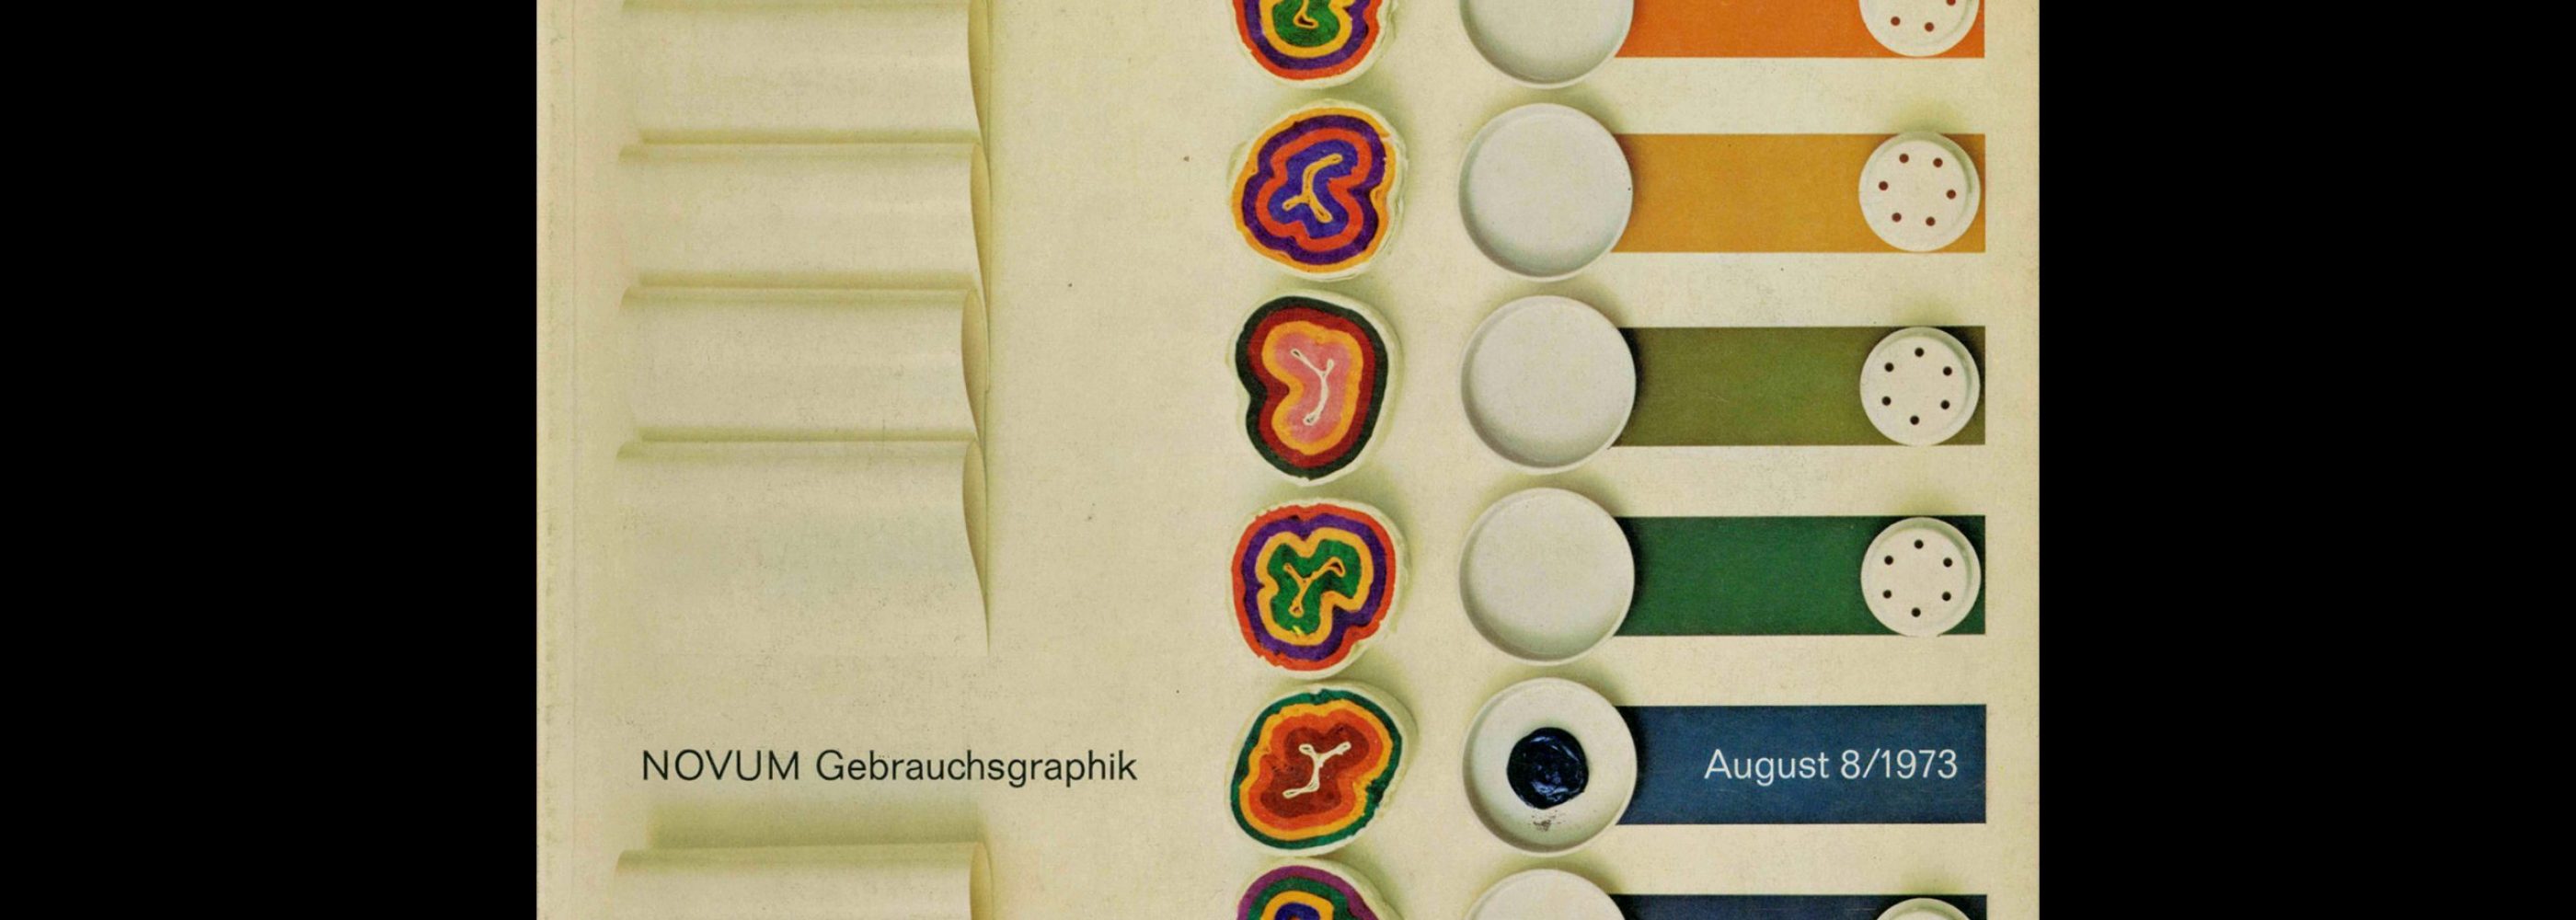 Novum Gebrauchsgraphik, 8, 1973. Cover design by Frank Eidlitz